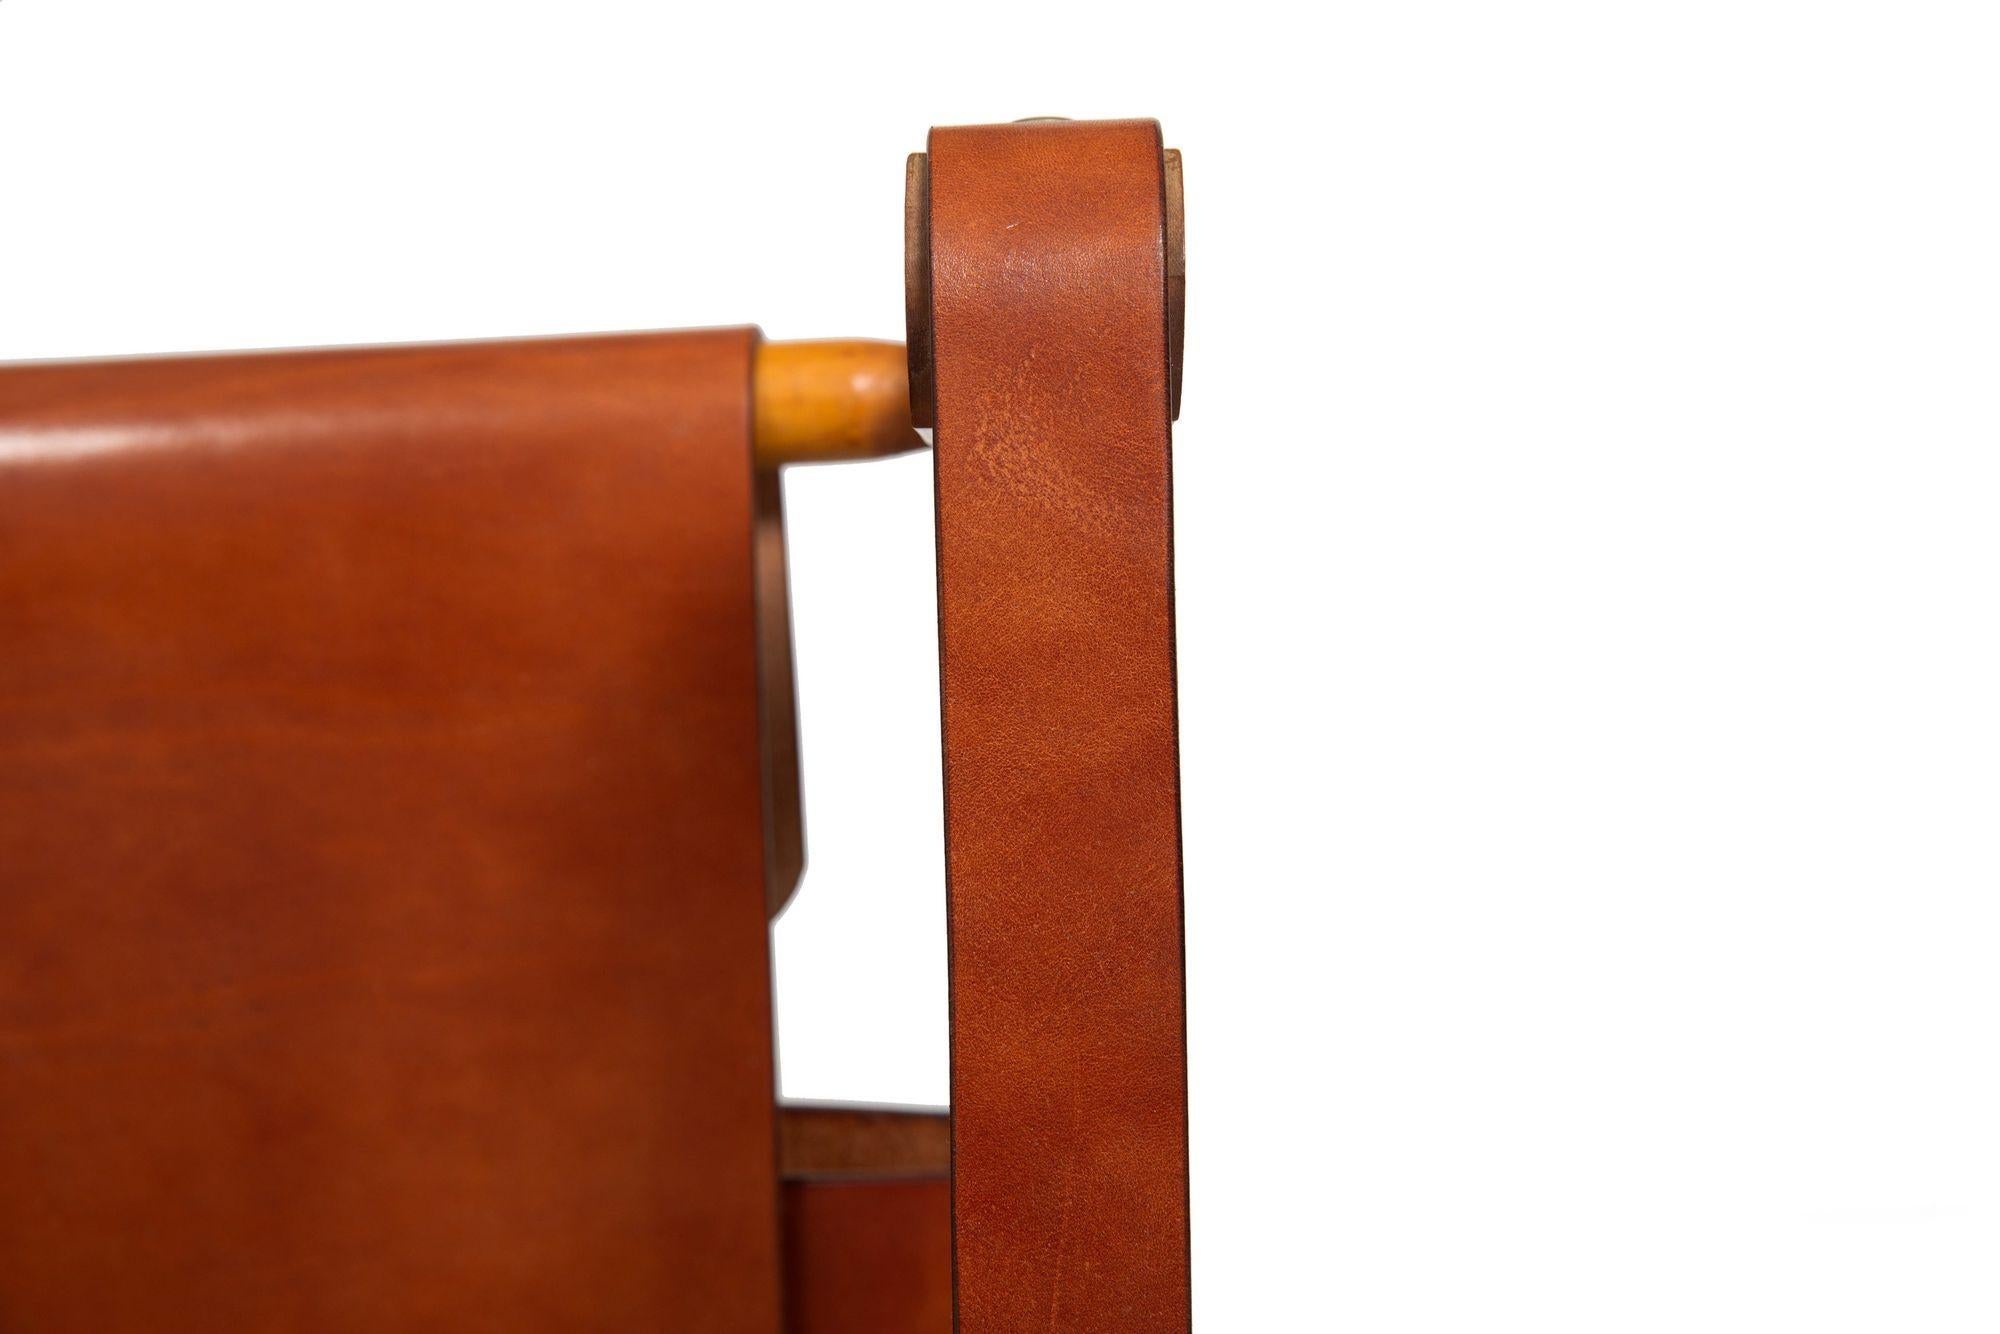 Circa 1970 Mid-Century Modern Leather Safari Chair attr. to Wilhelm Kienzle For Sale 15